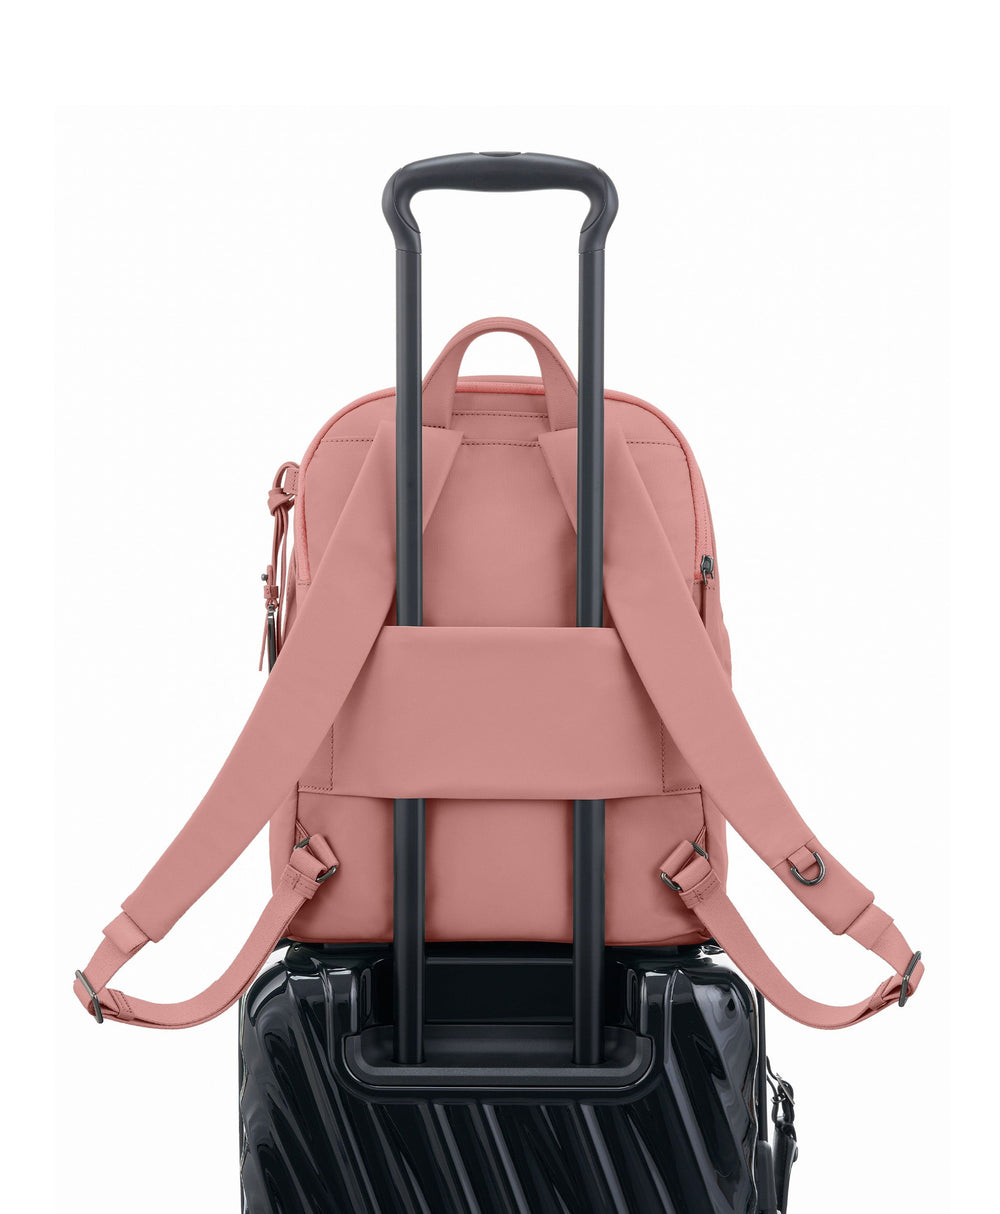 Halsey Backpack